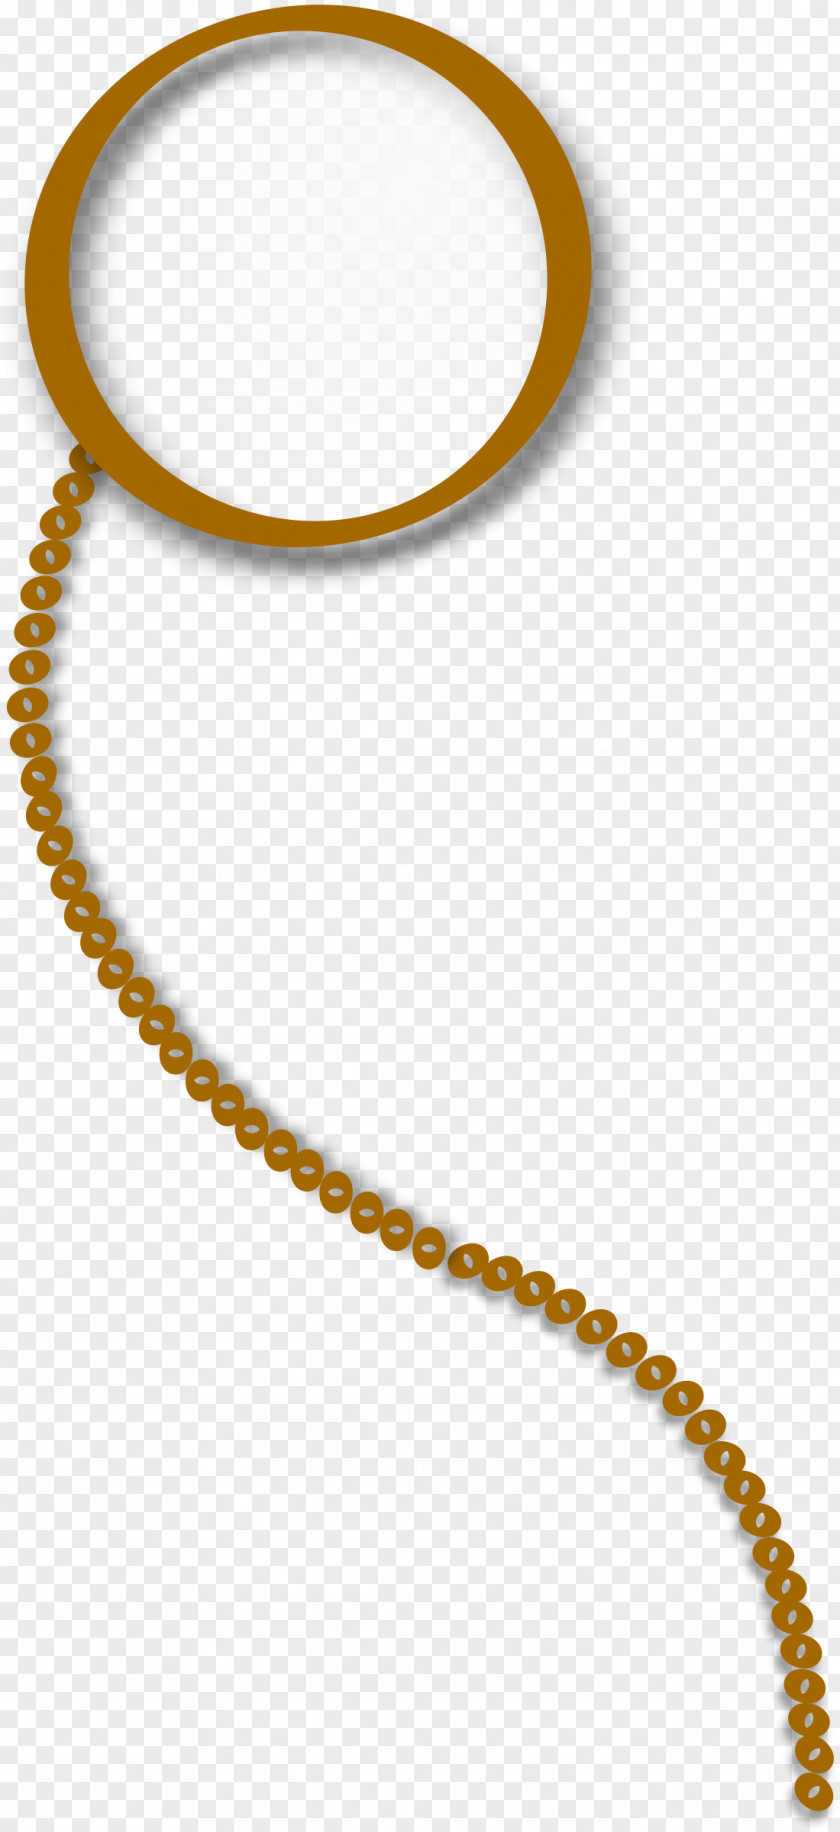 Gold Chain Monocle Glasses Clip Art PNG